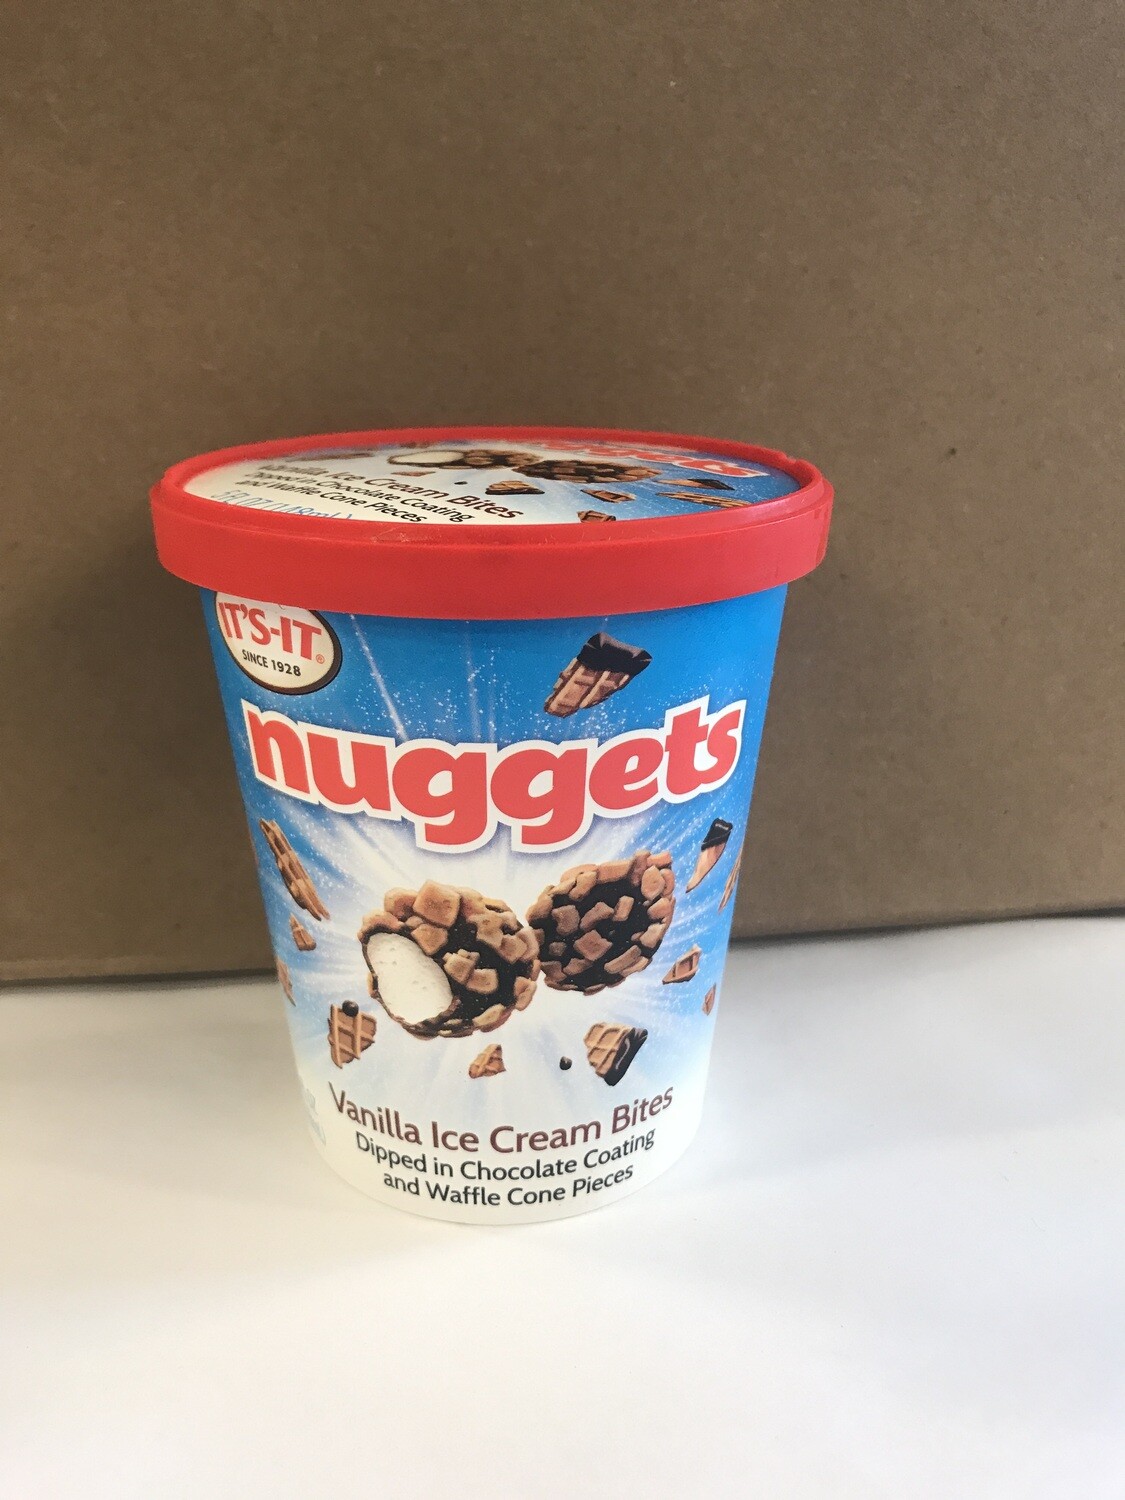 Frozen / Ice Cream Novelty / It's It Nuggets